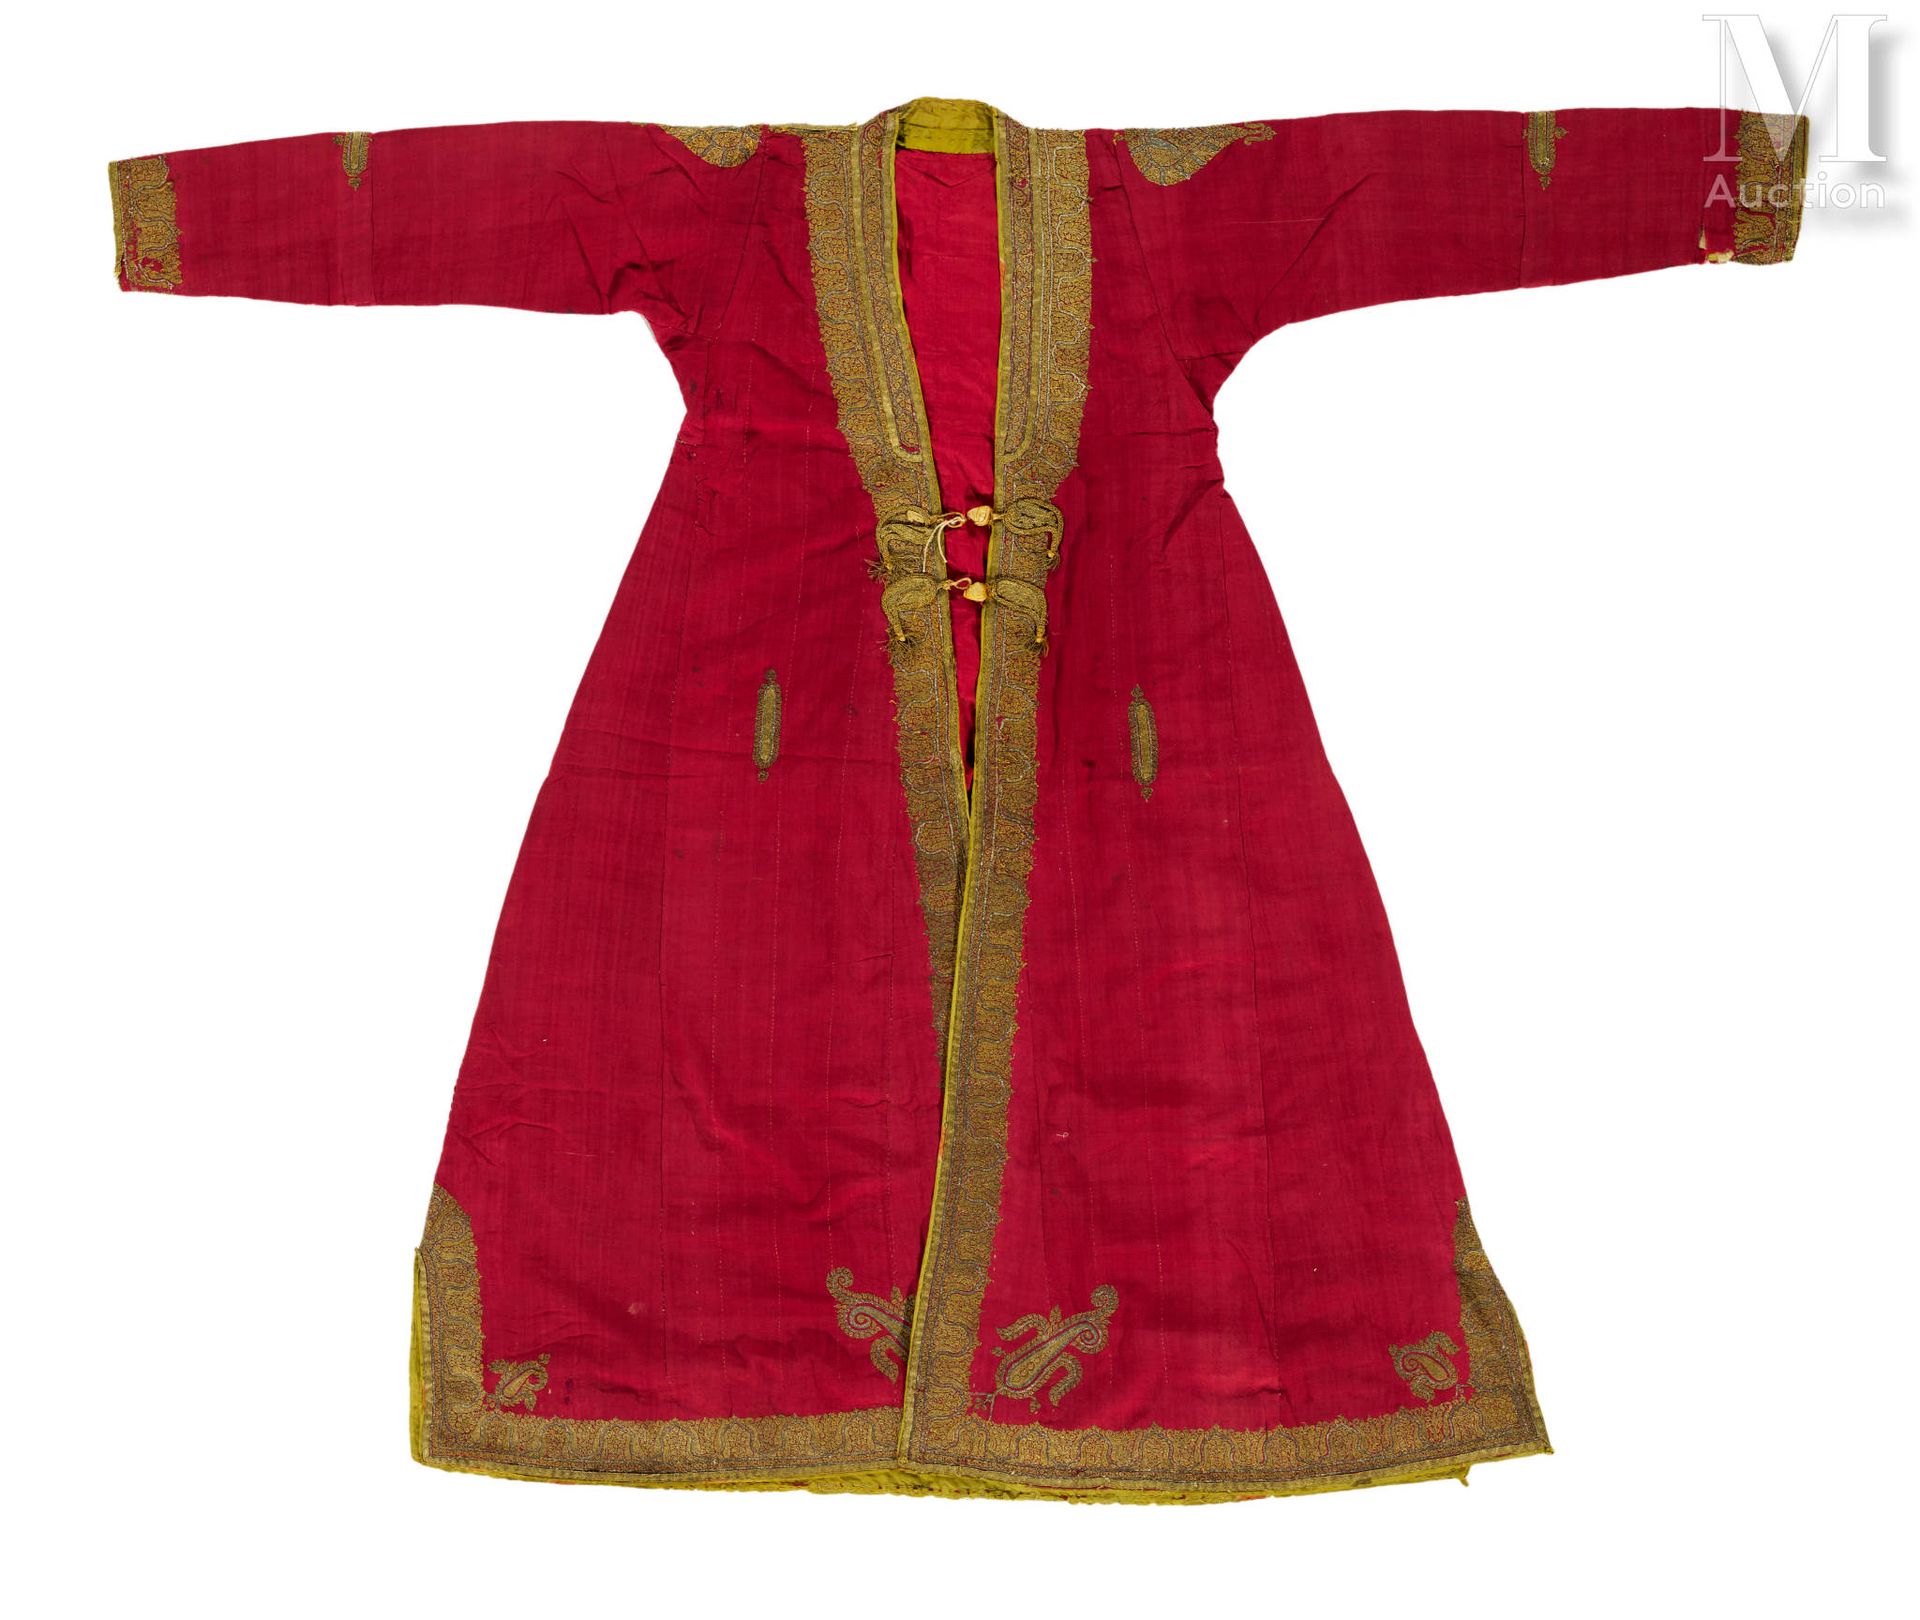 Choga - Robe sikh 印度，旁遮普邦，约1850-1870年
紫色棉布和丝绸的男士礼服（choga），在佩斯利图案中用金线和银线绣出丰富的边框。内&hellip;